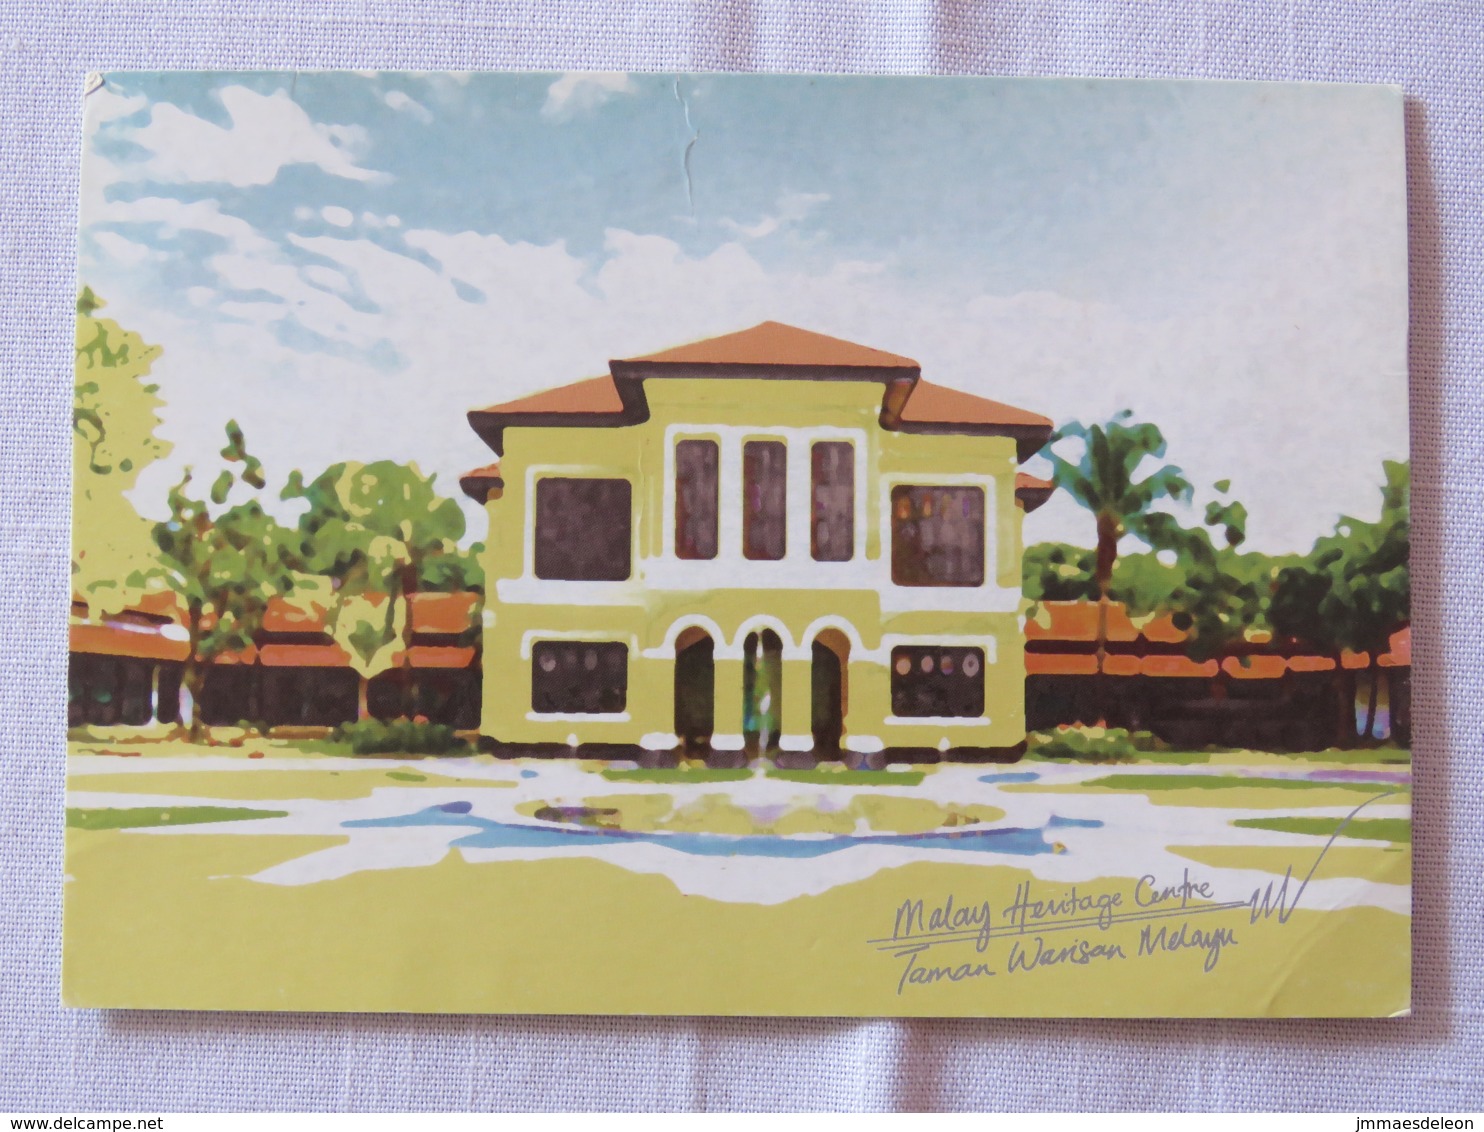 Malaysia 2012 Unused Postcard - Malay Heritage Centre - Malaysia